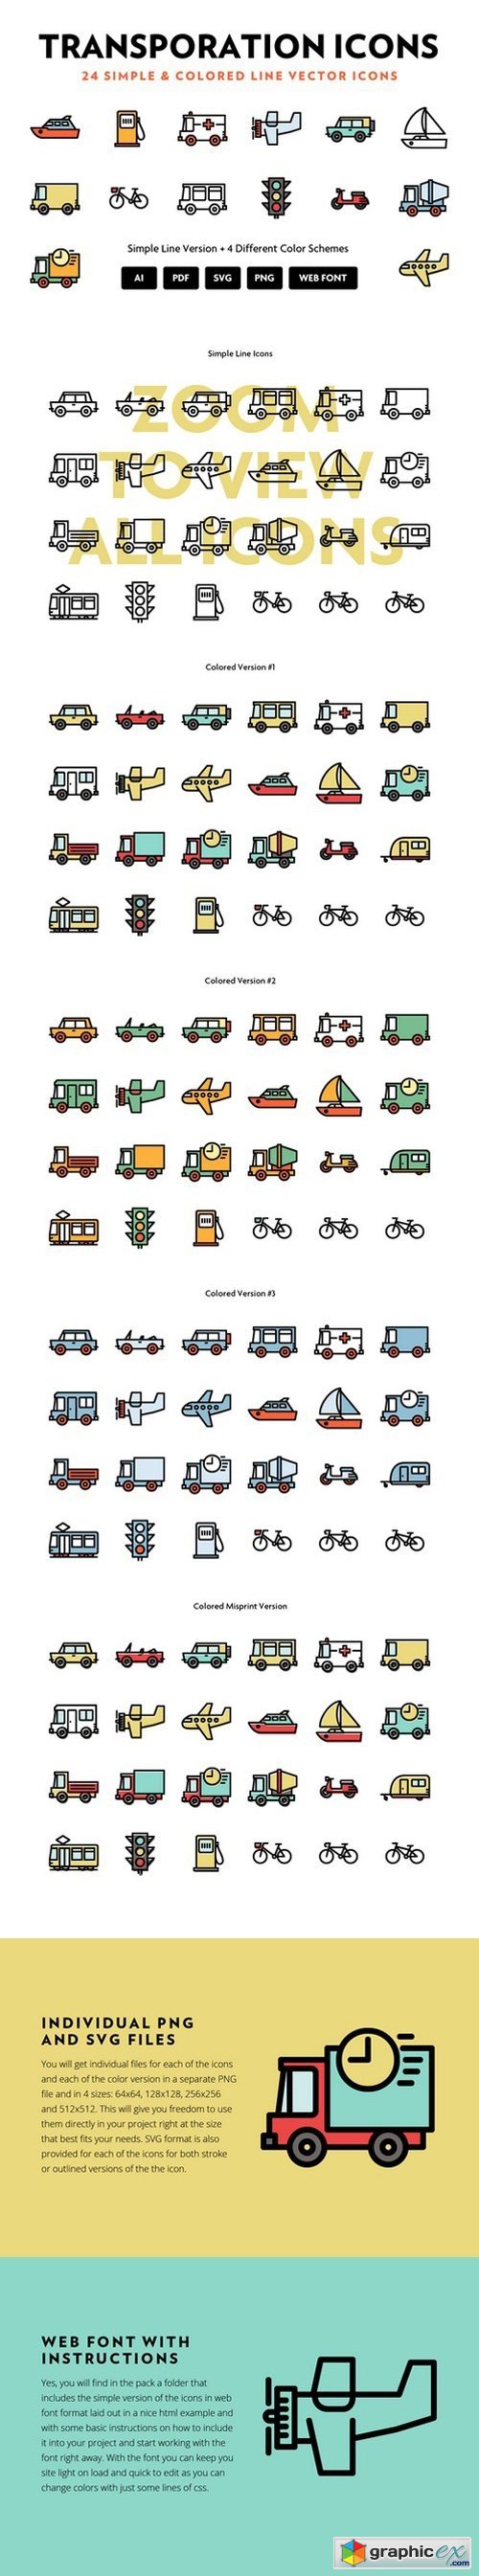 Transportation Line Icons